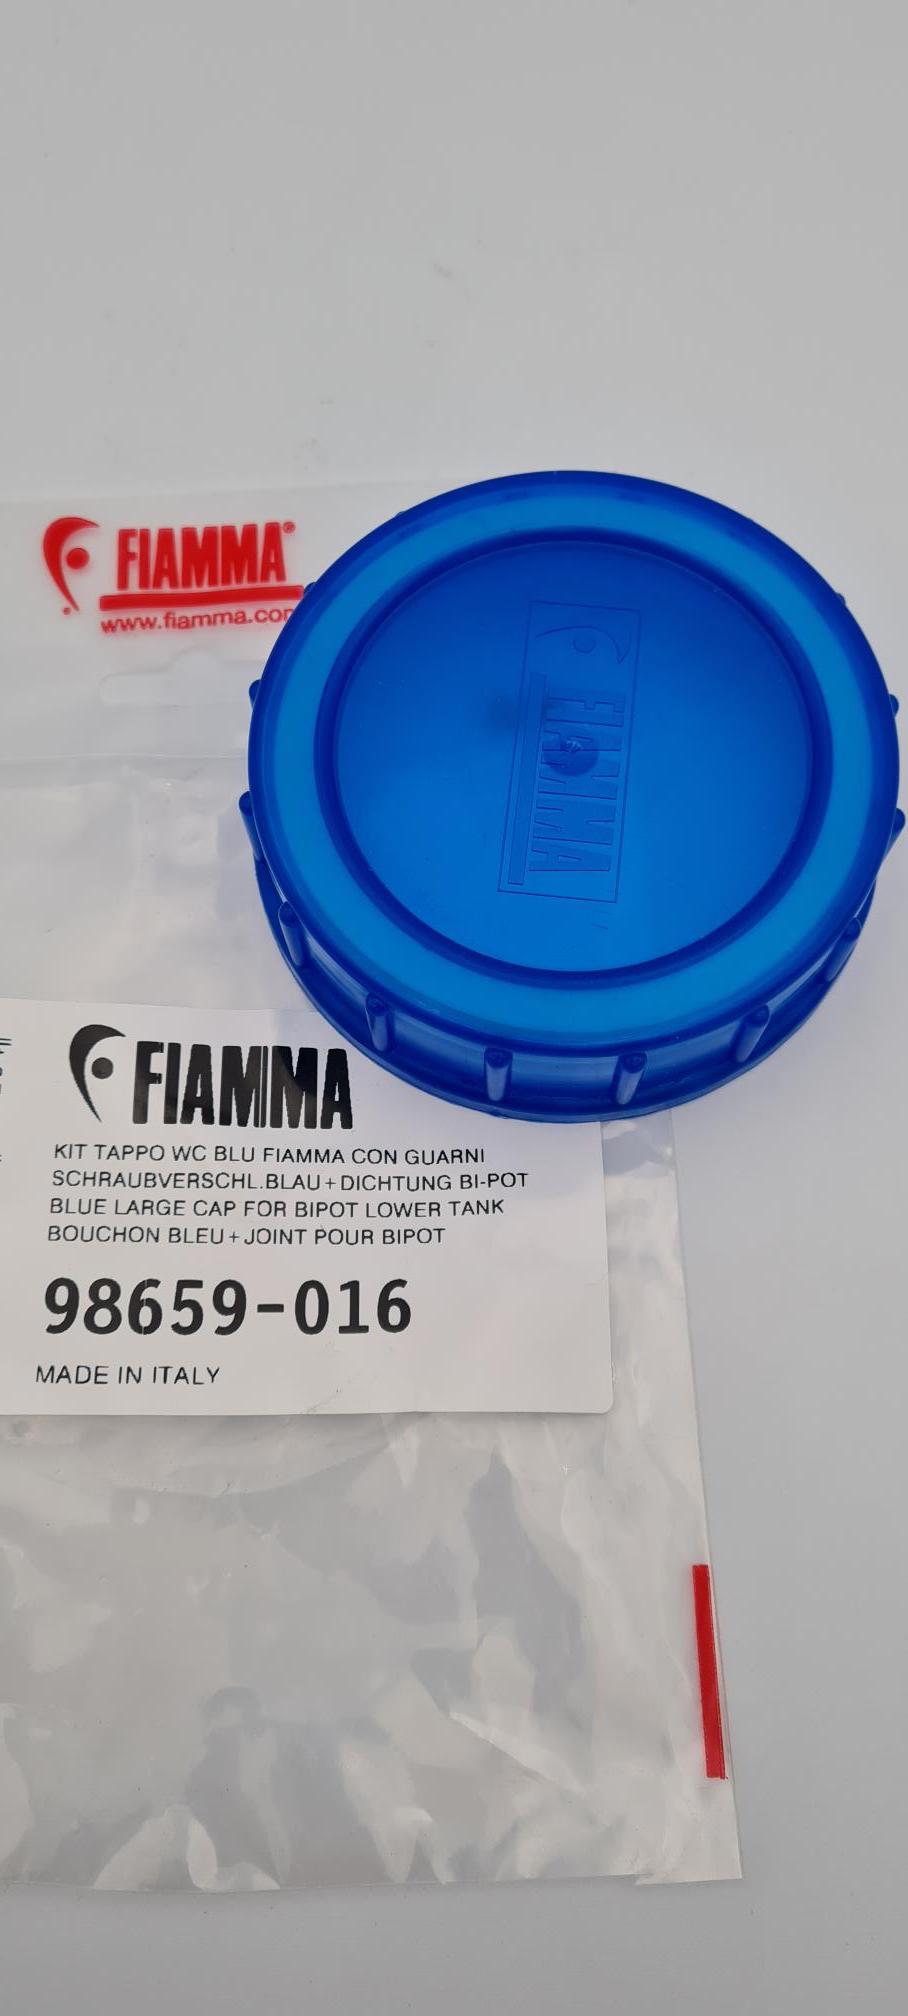 Fiamma Bipot Lower Tank Large Cap - Blue - 98659-016